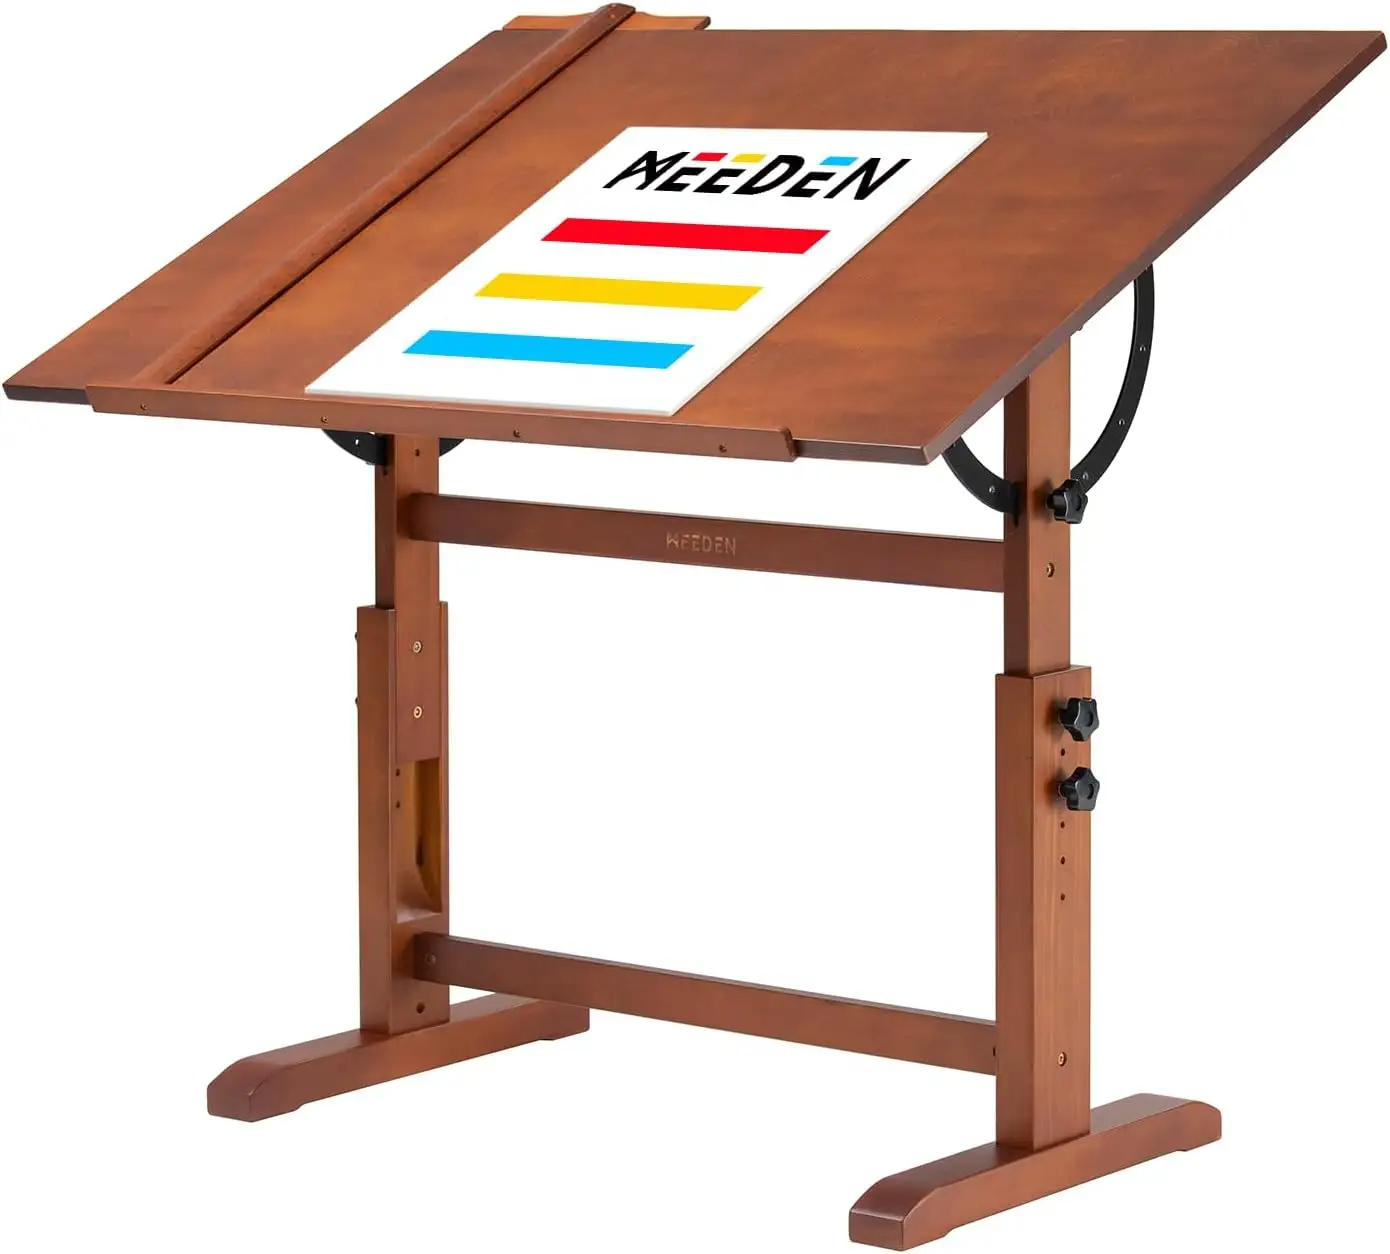 MEEDEN tavolo da disegno in legno Extra Large, tavolo da disegno artista, tavolo artigianale con altezza regolabile, inclinabile